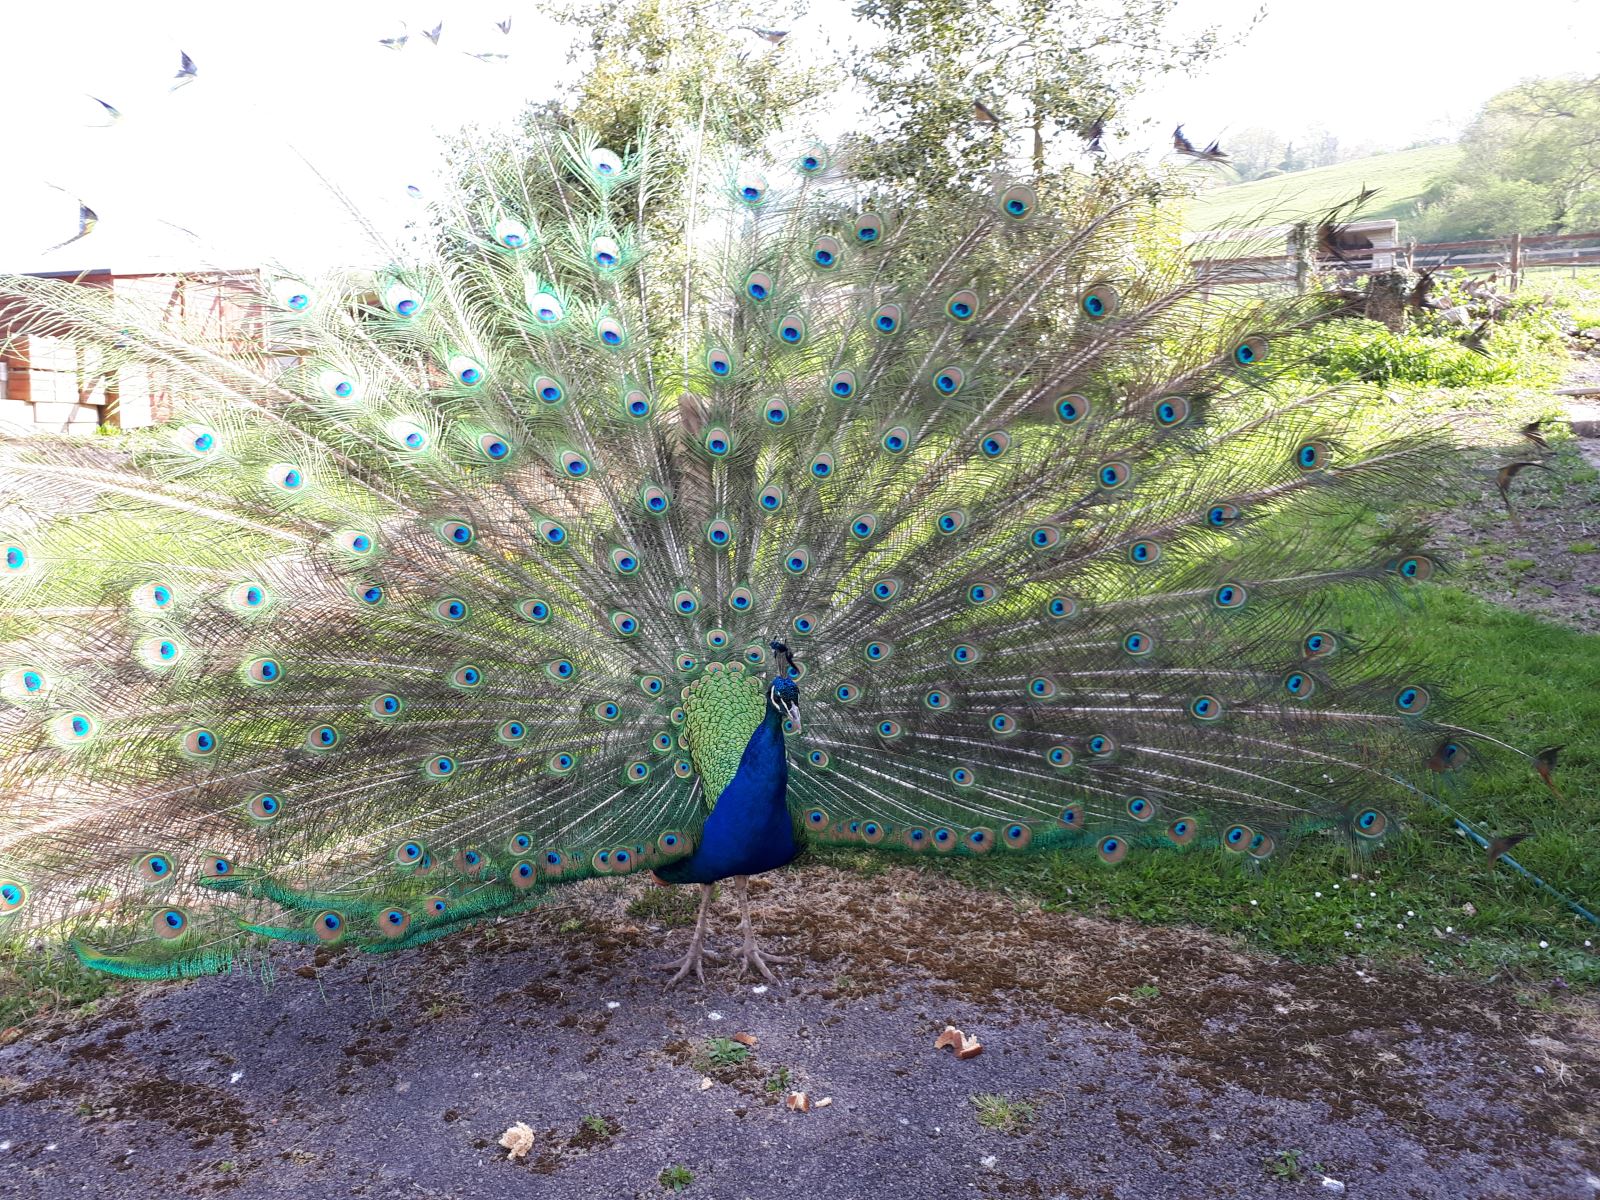 Peacock at Dick Whittington